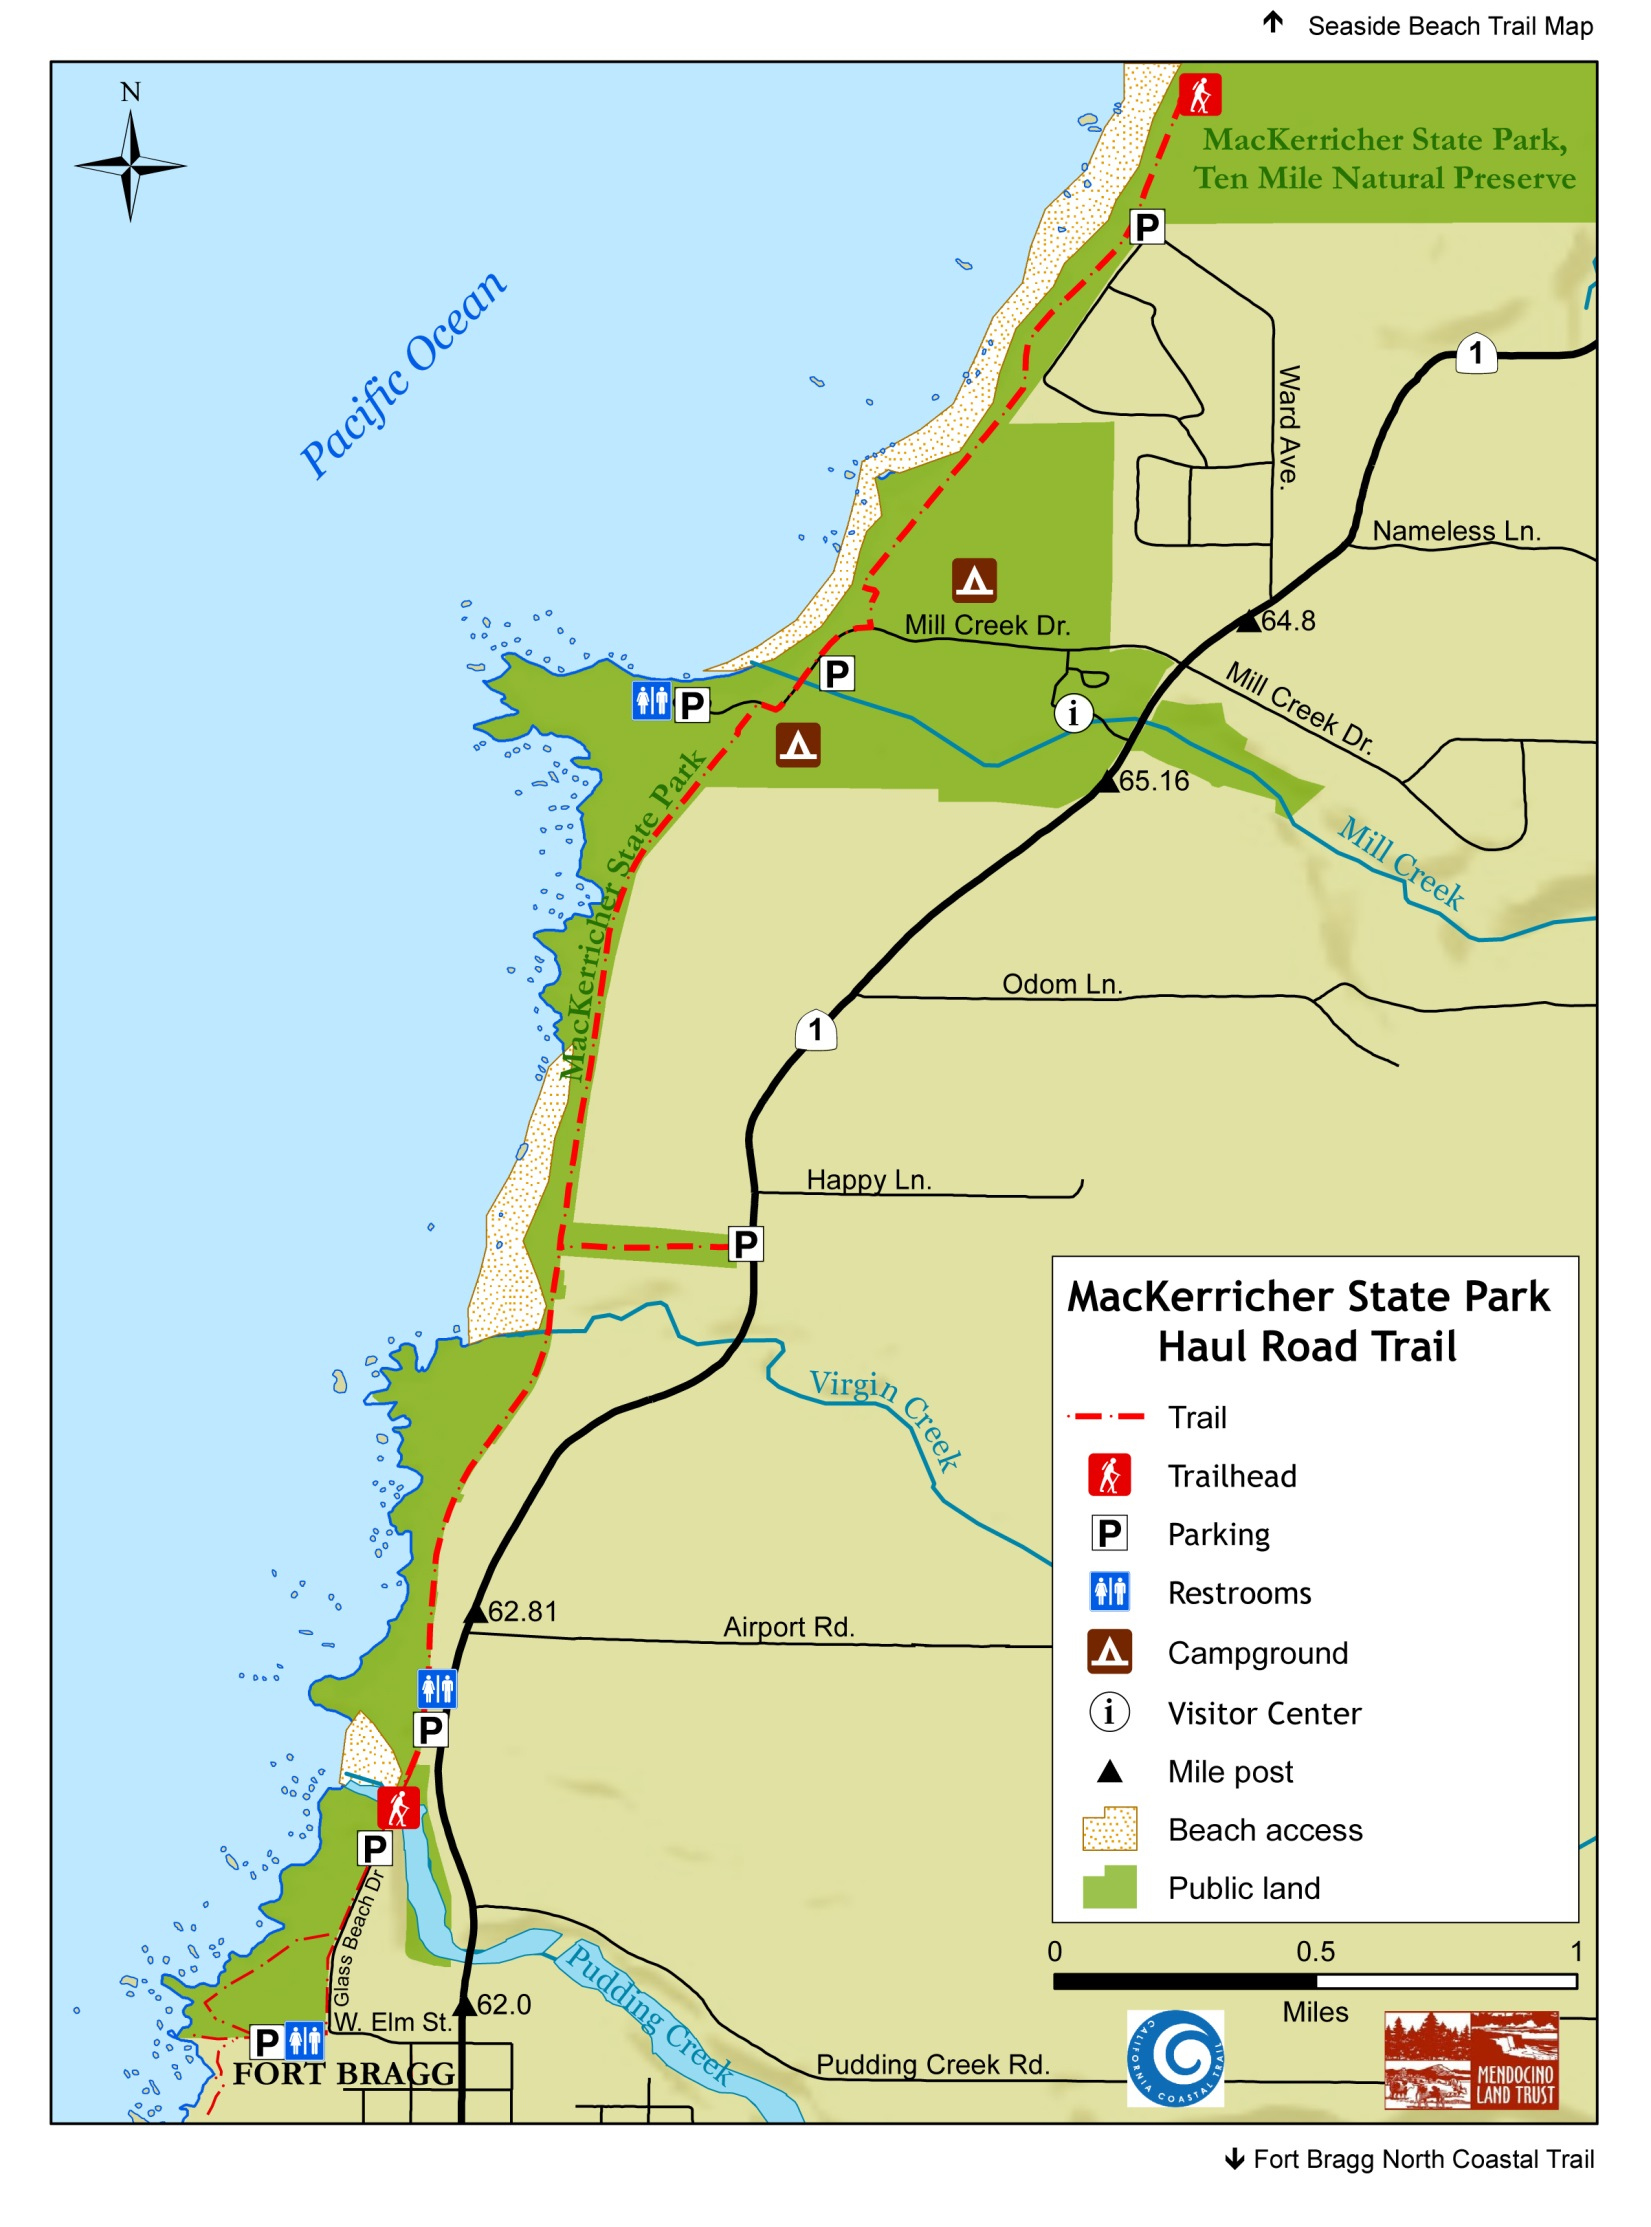 Seaside Beach Northern Coastal Trails Mendocino Land Trust 2019 